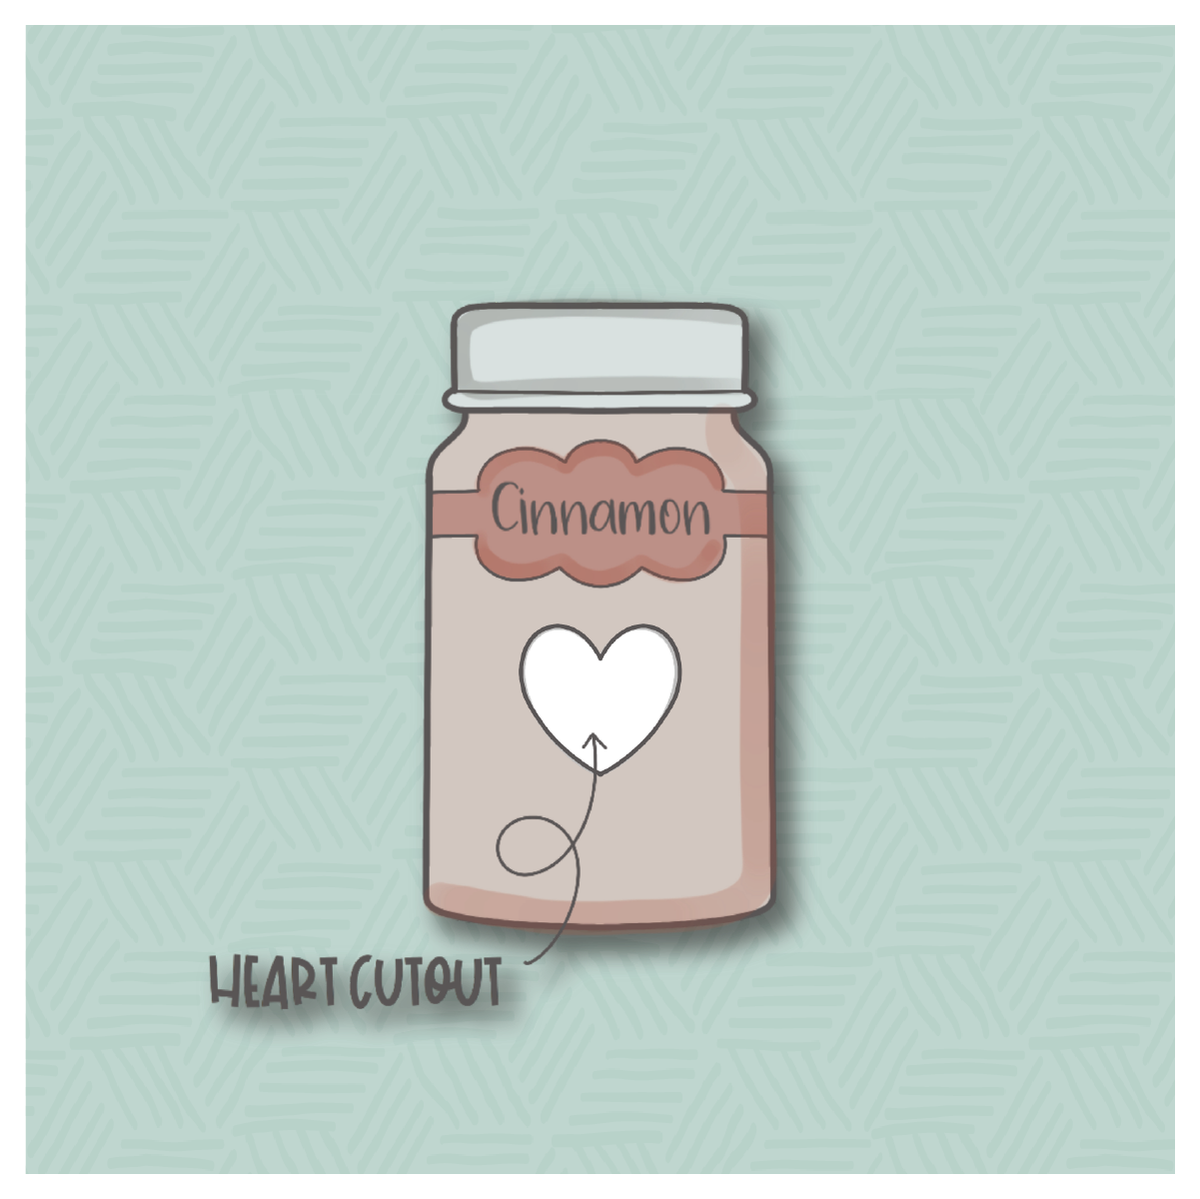 Heart Cutout Spice Jar Cookie Cutter